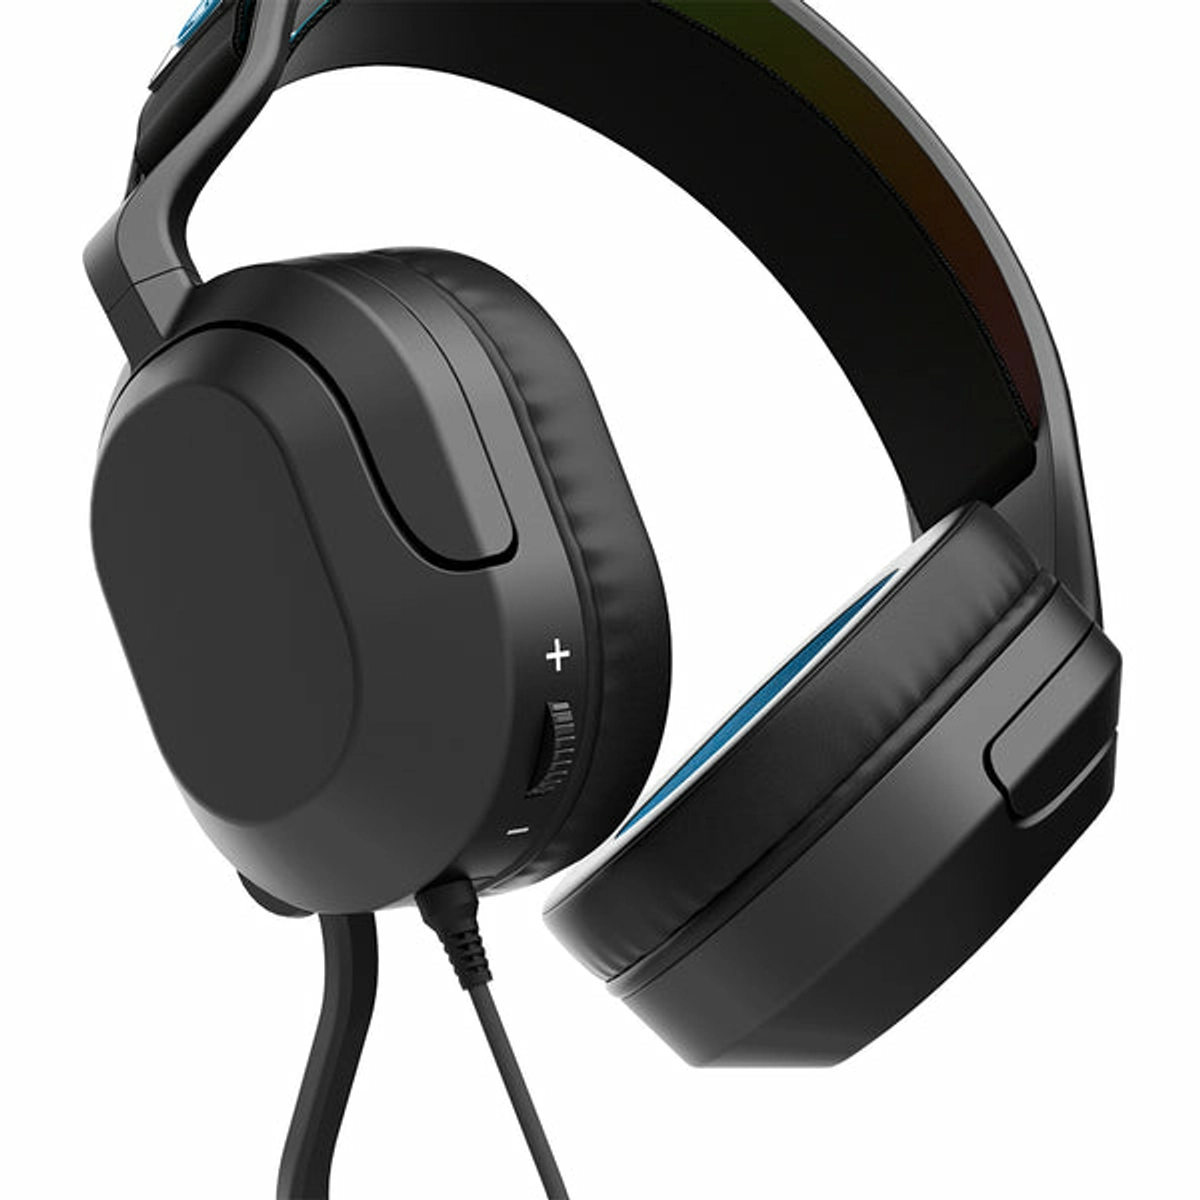 JLAB Nightfall PC Gaming Wired Headset